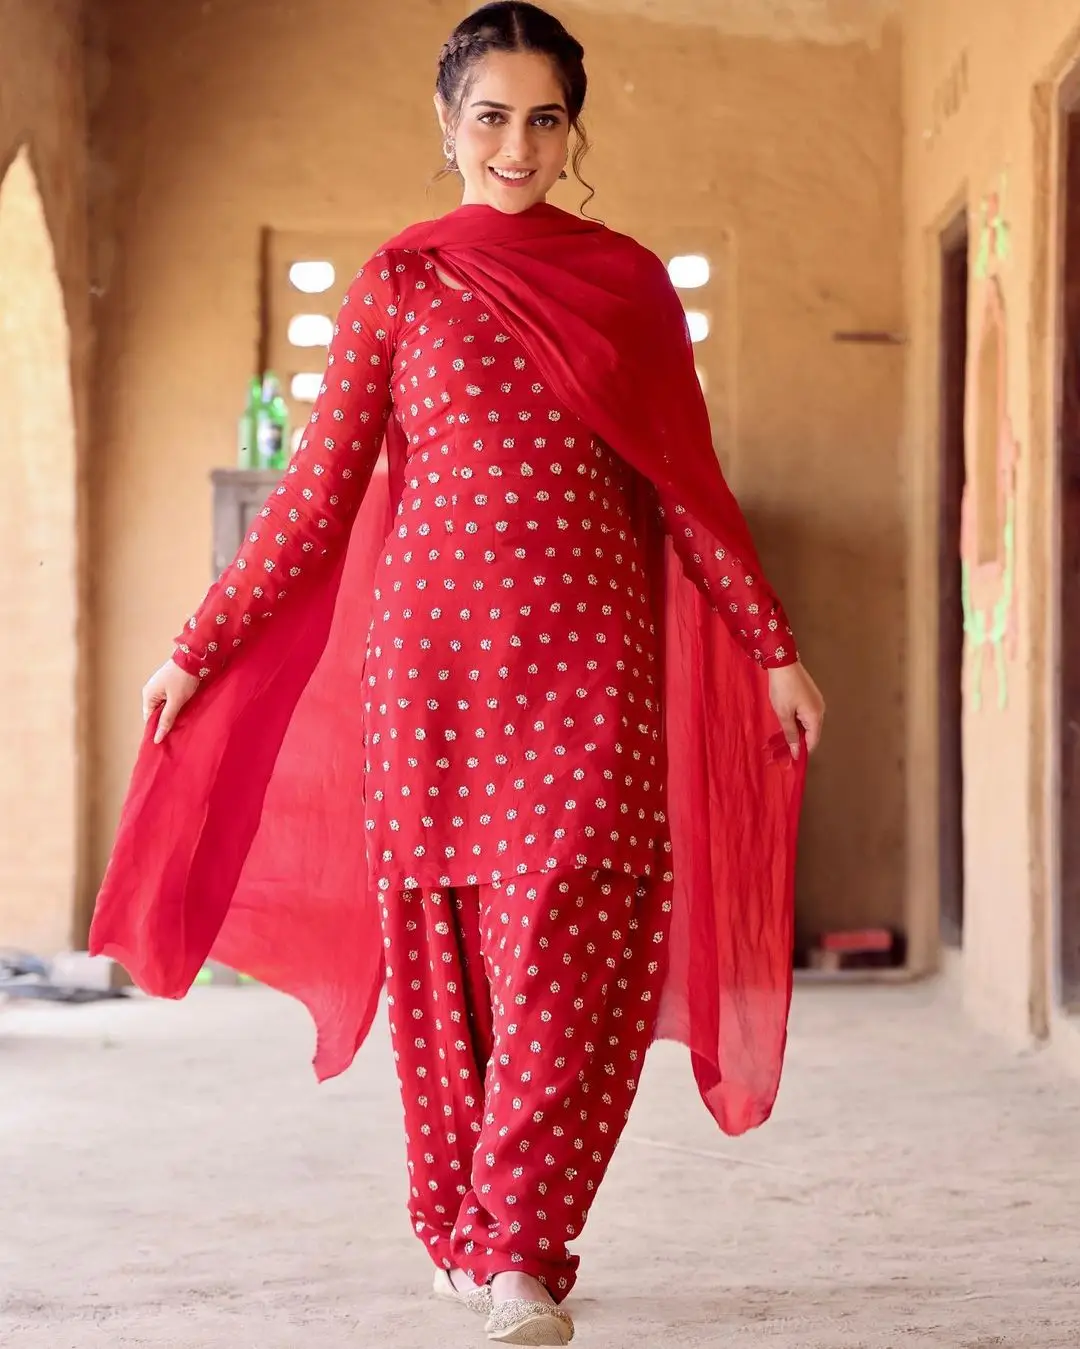 Malvi Malhotra Photoshoot In Red Gown